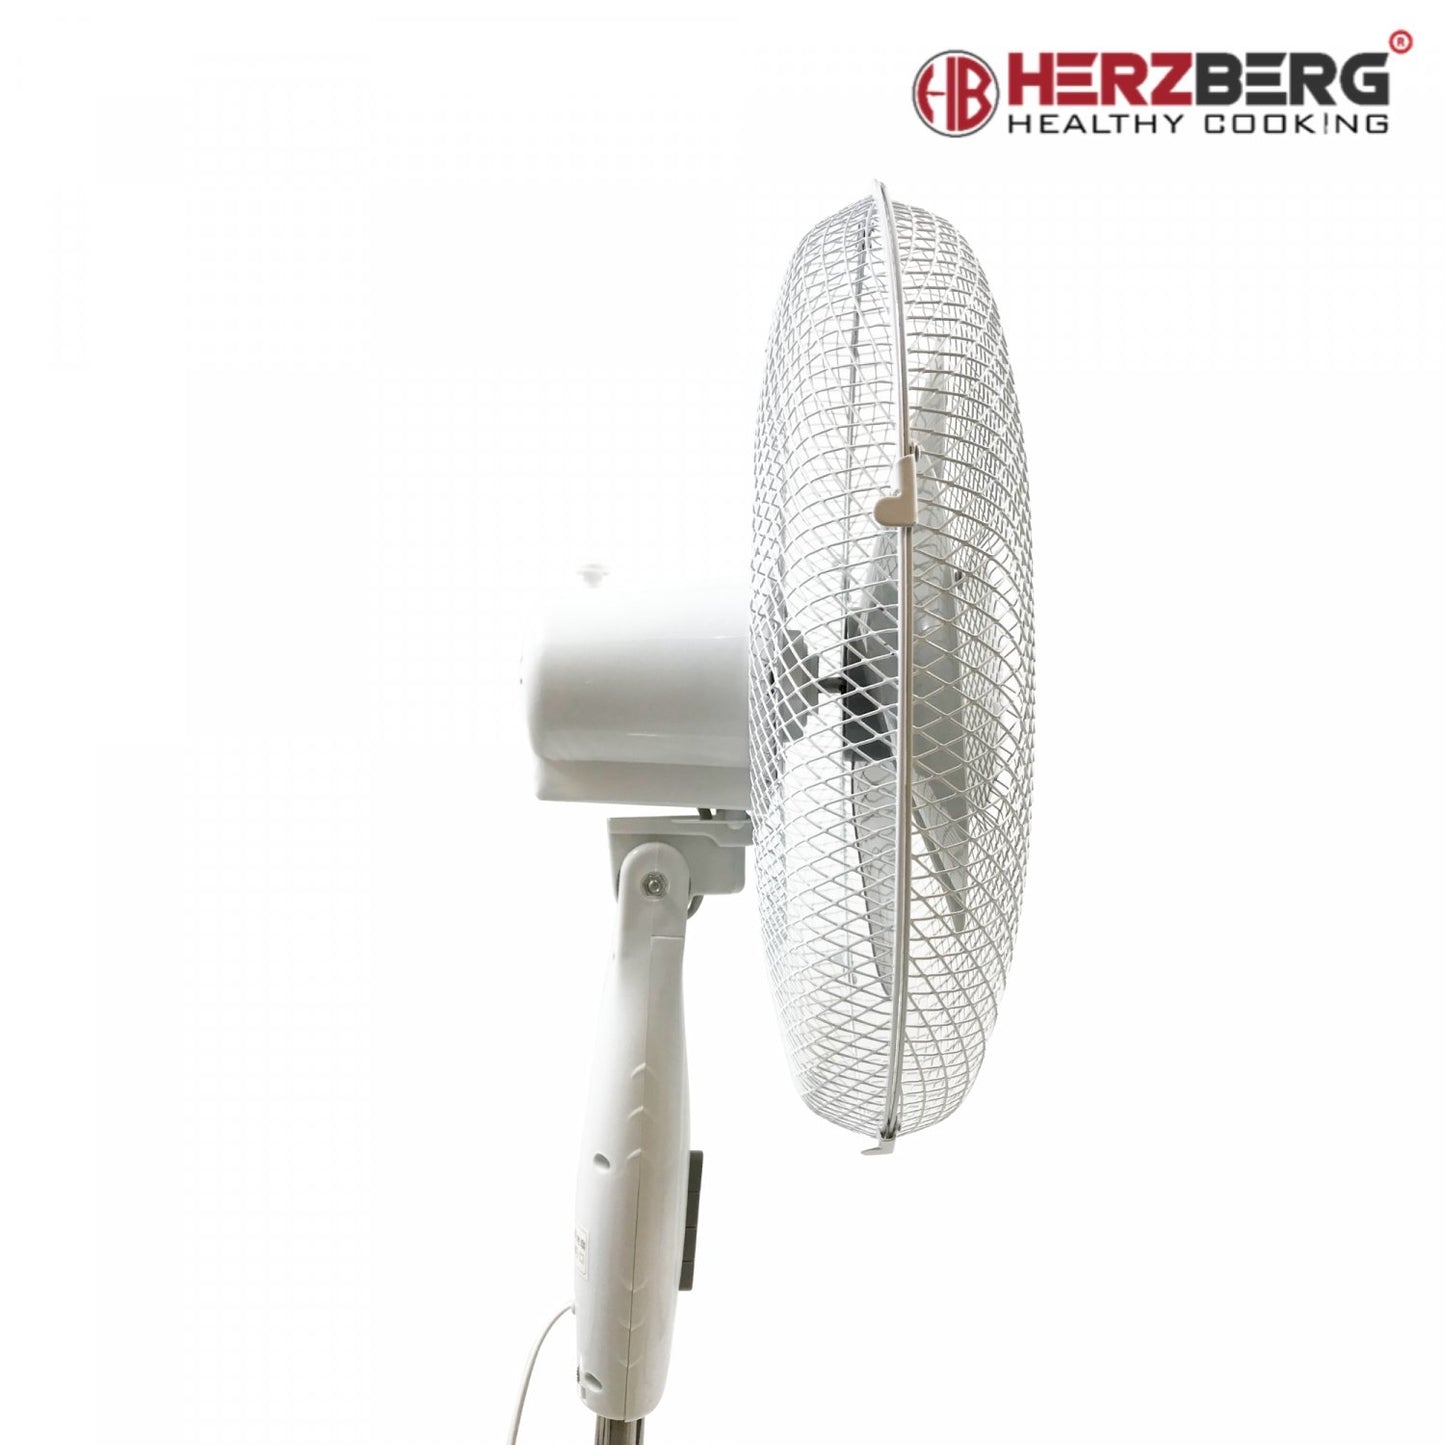 Herzberg HG-8018: 16-inch standaard oscillerende ventilator - Bivakshop